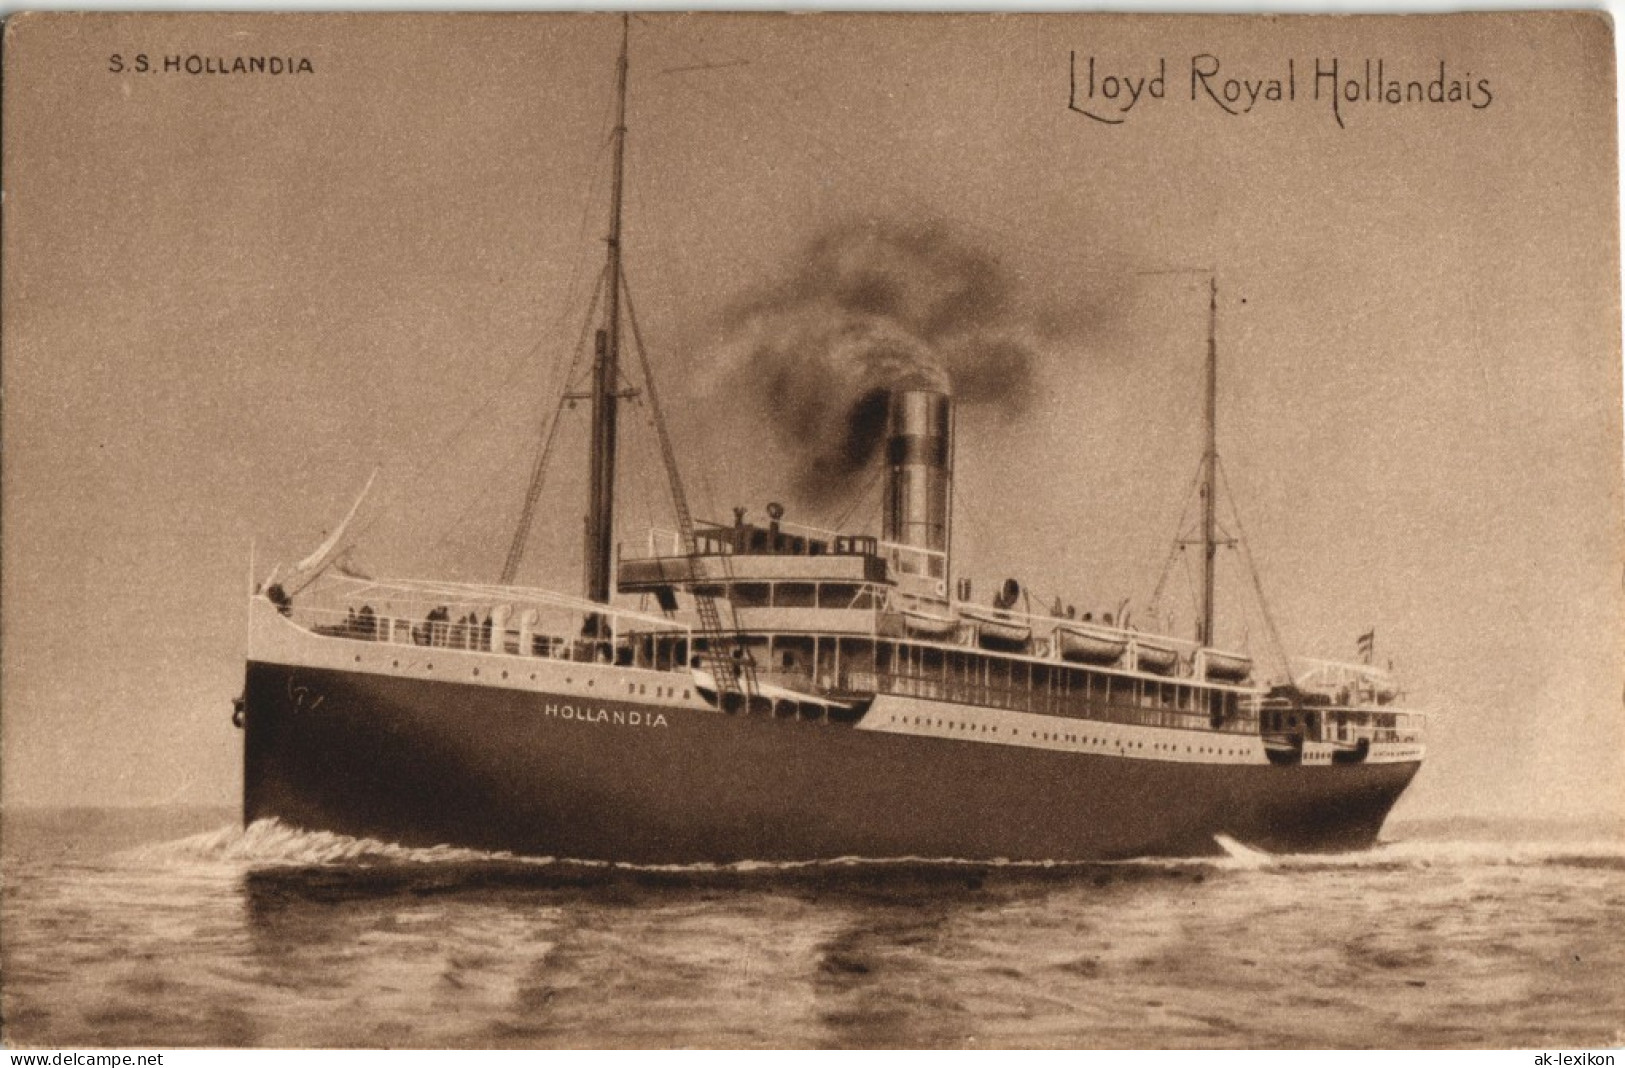 Ansichtskarte  Dampfer S.S. HOLLANDIA Lloyd Roayl Hollandais 1928 - Paquebote